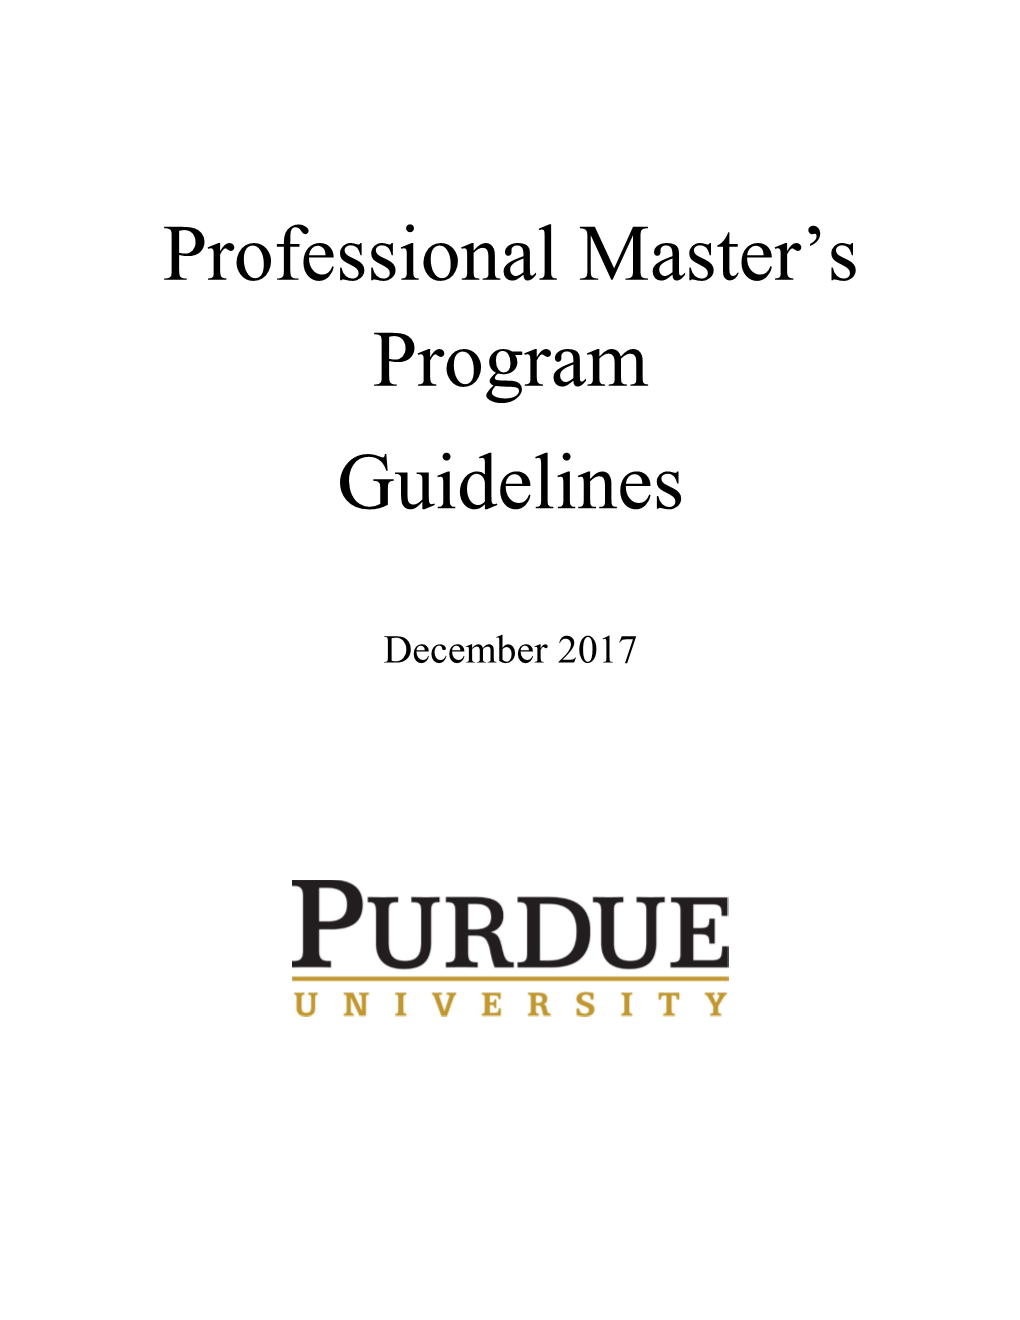 Professional Master's Program Guidelines